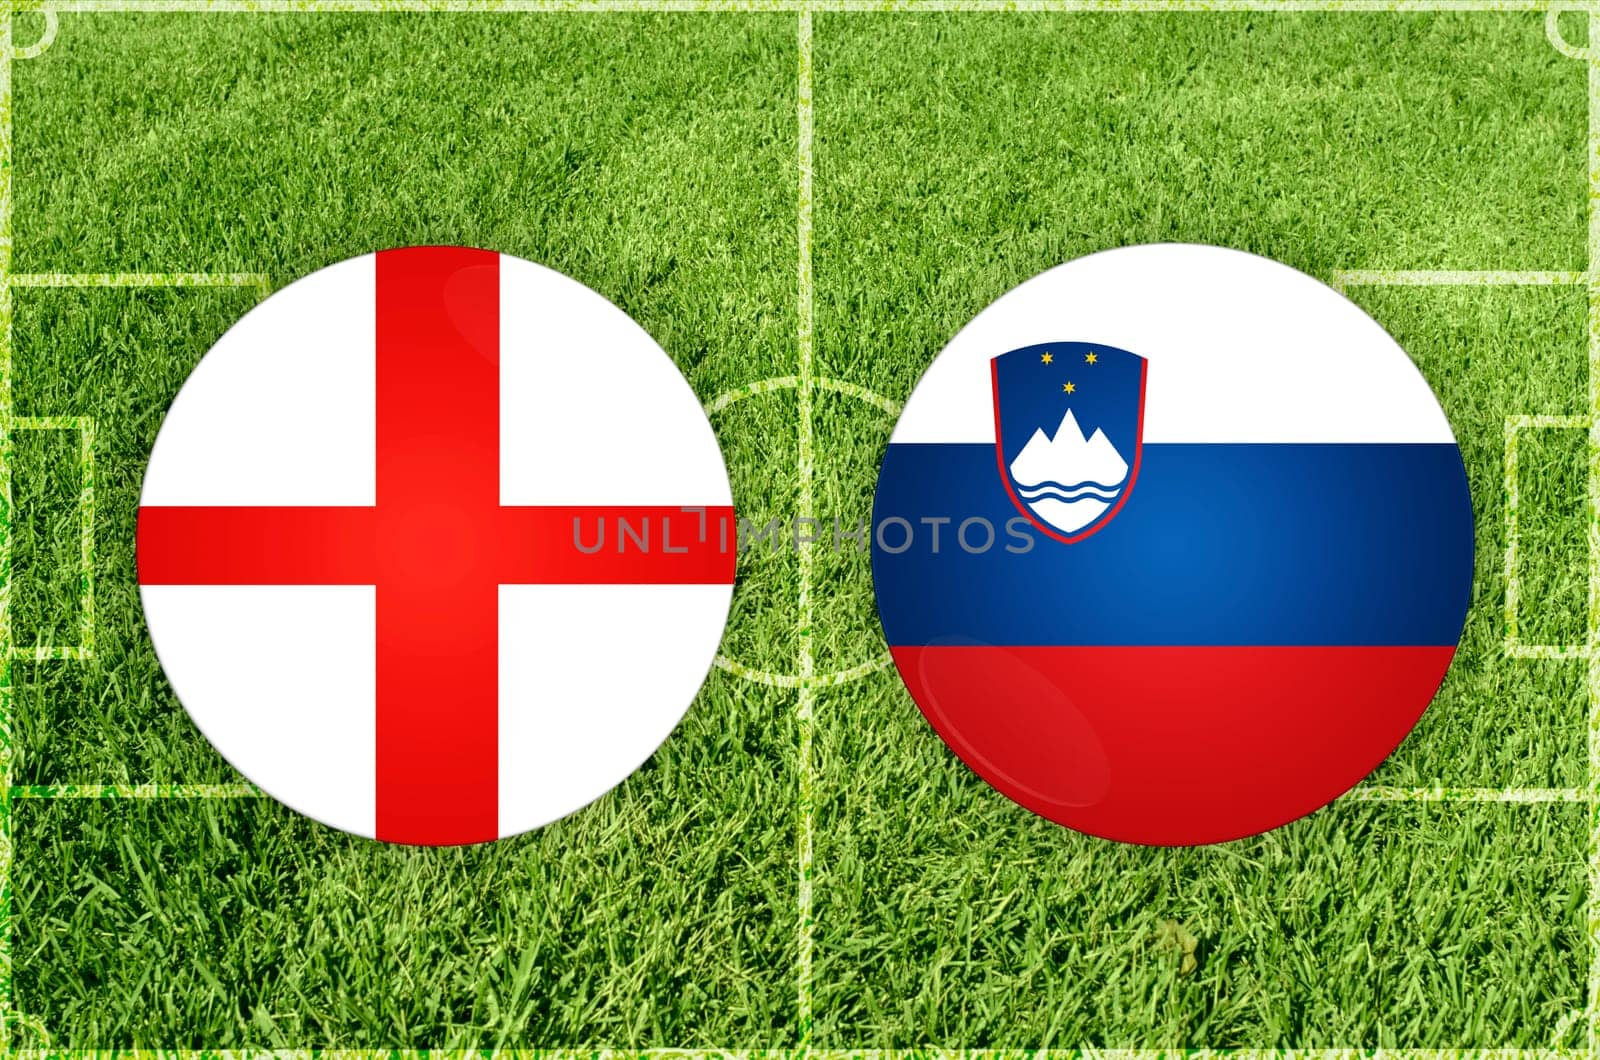 England vs Slovenia football match by rusak